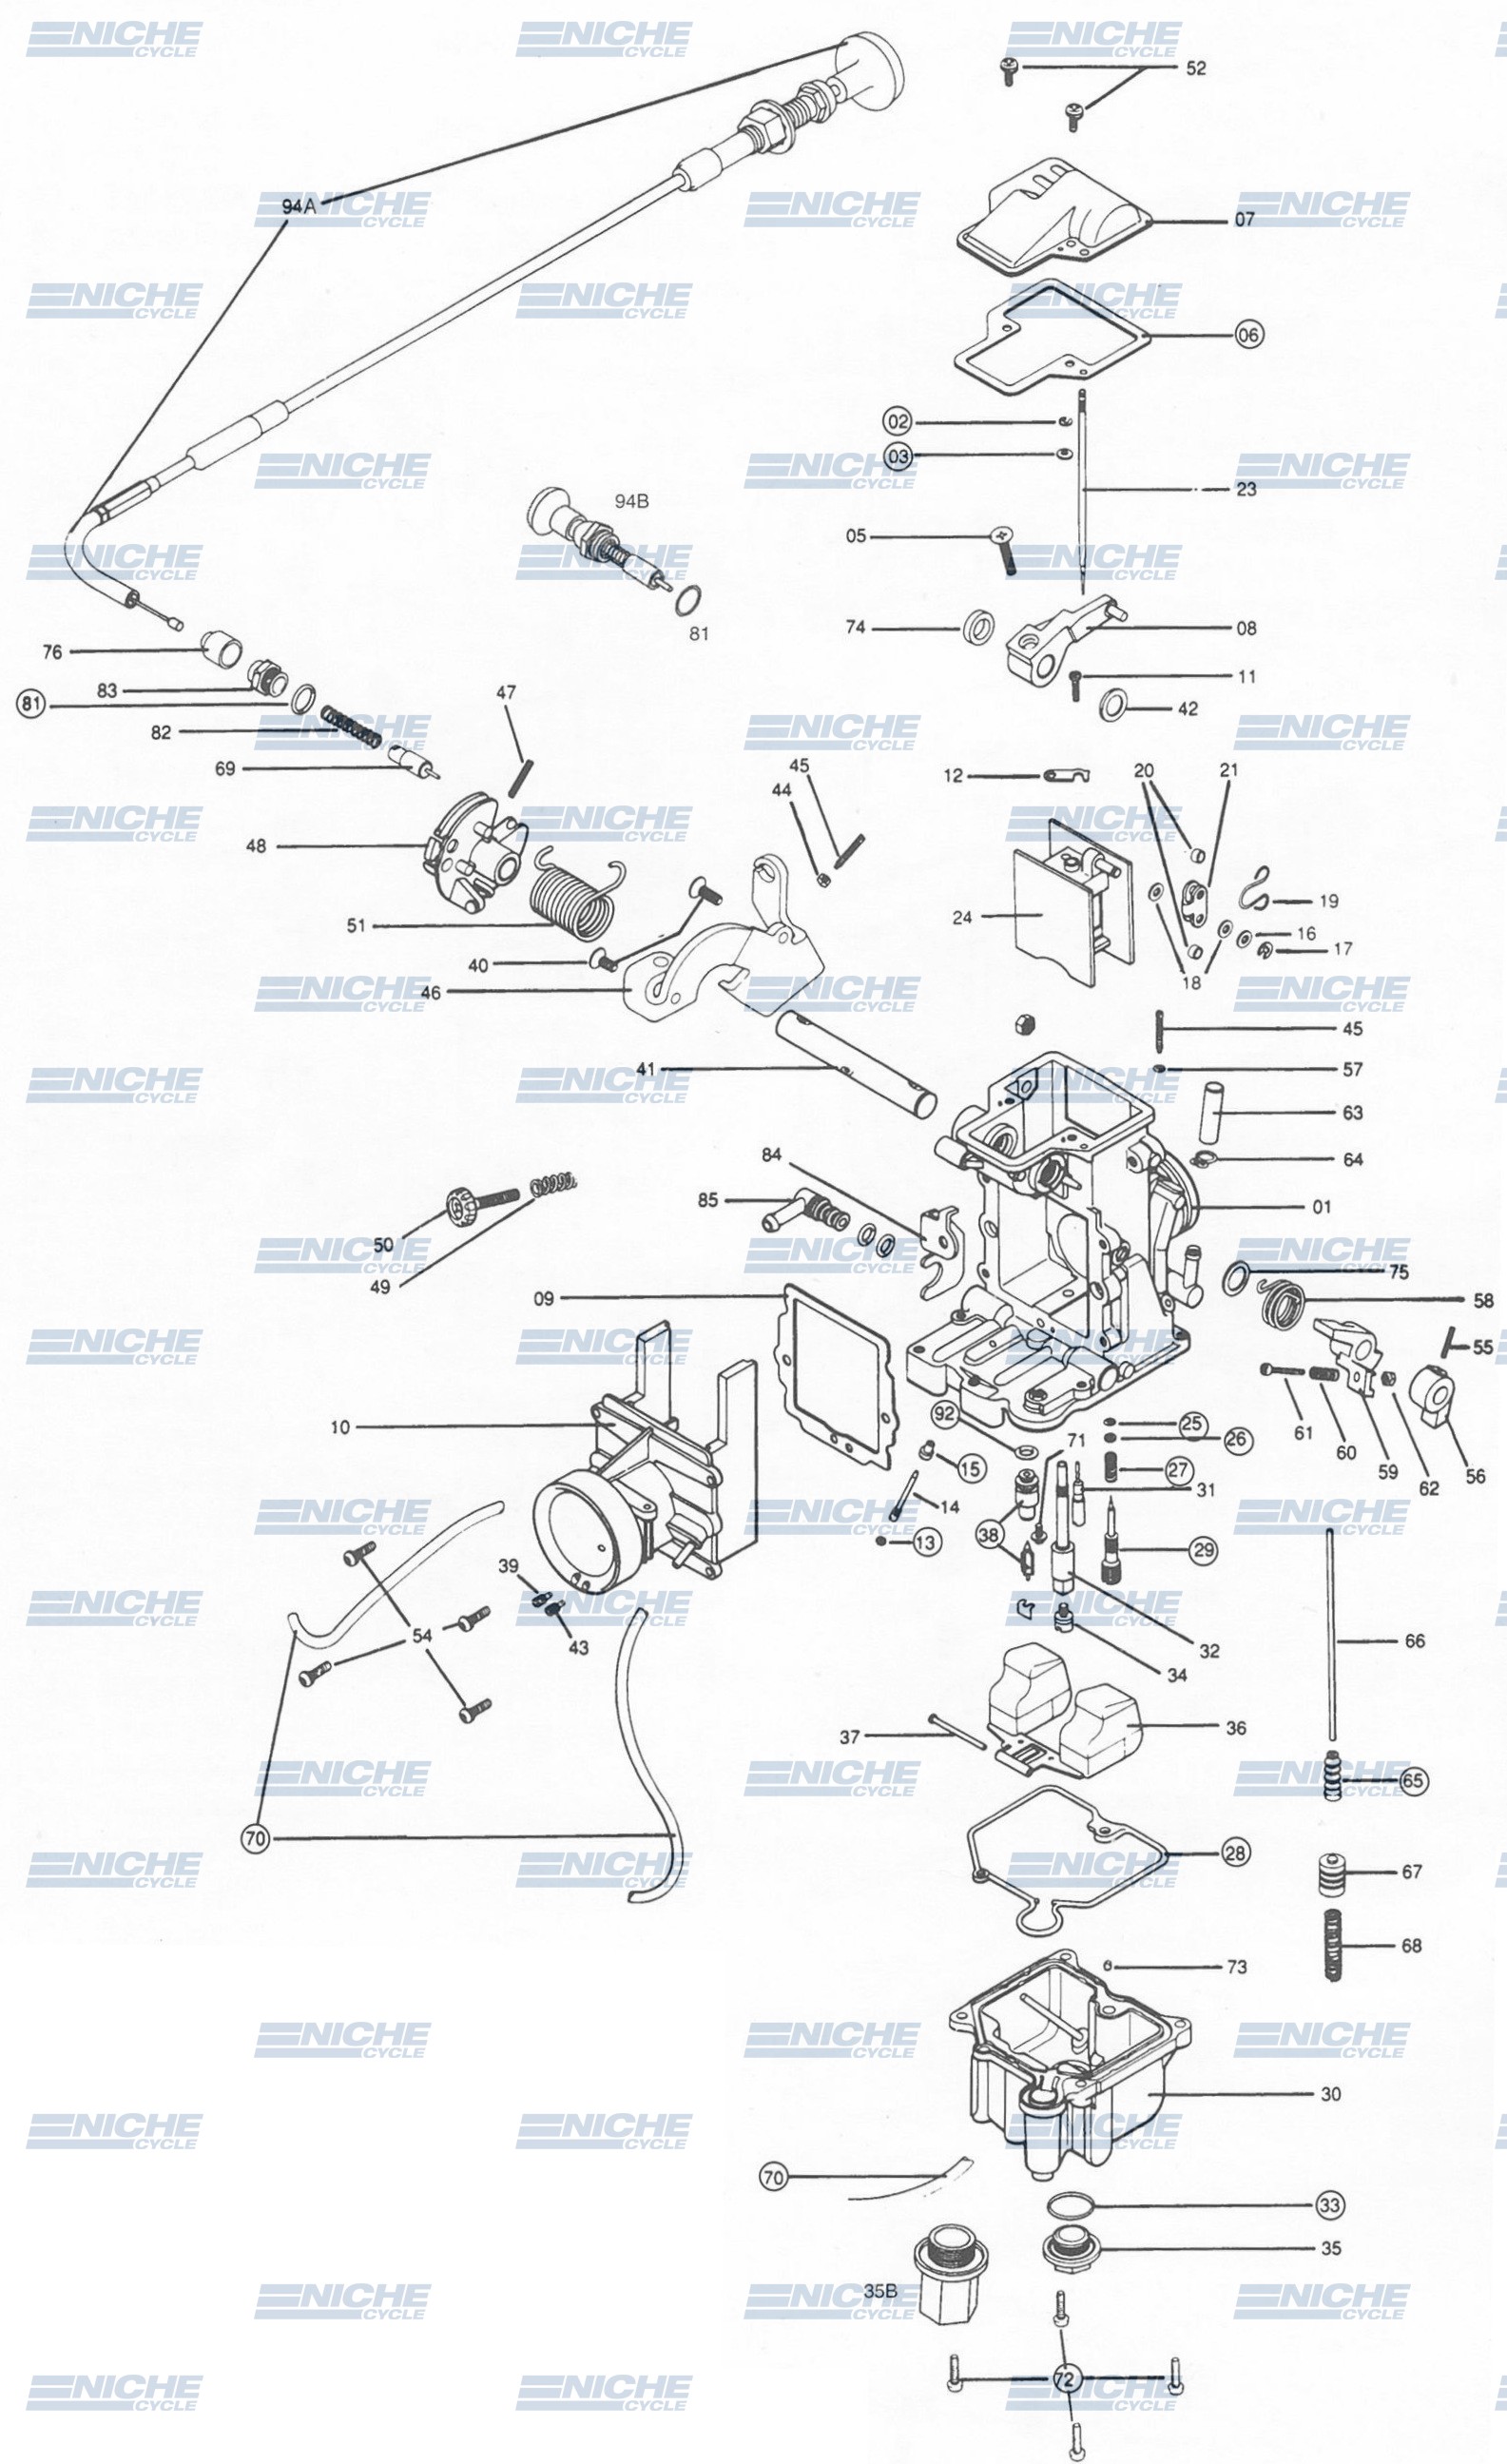 Mikuni HS40 Exploded View - Replacement Parts Listing HS40_parts_list